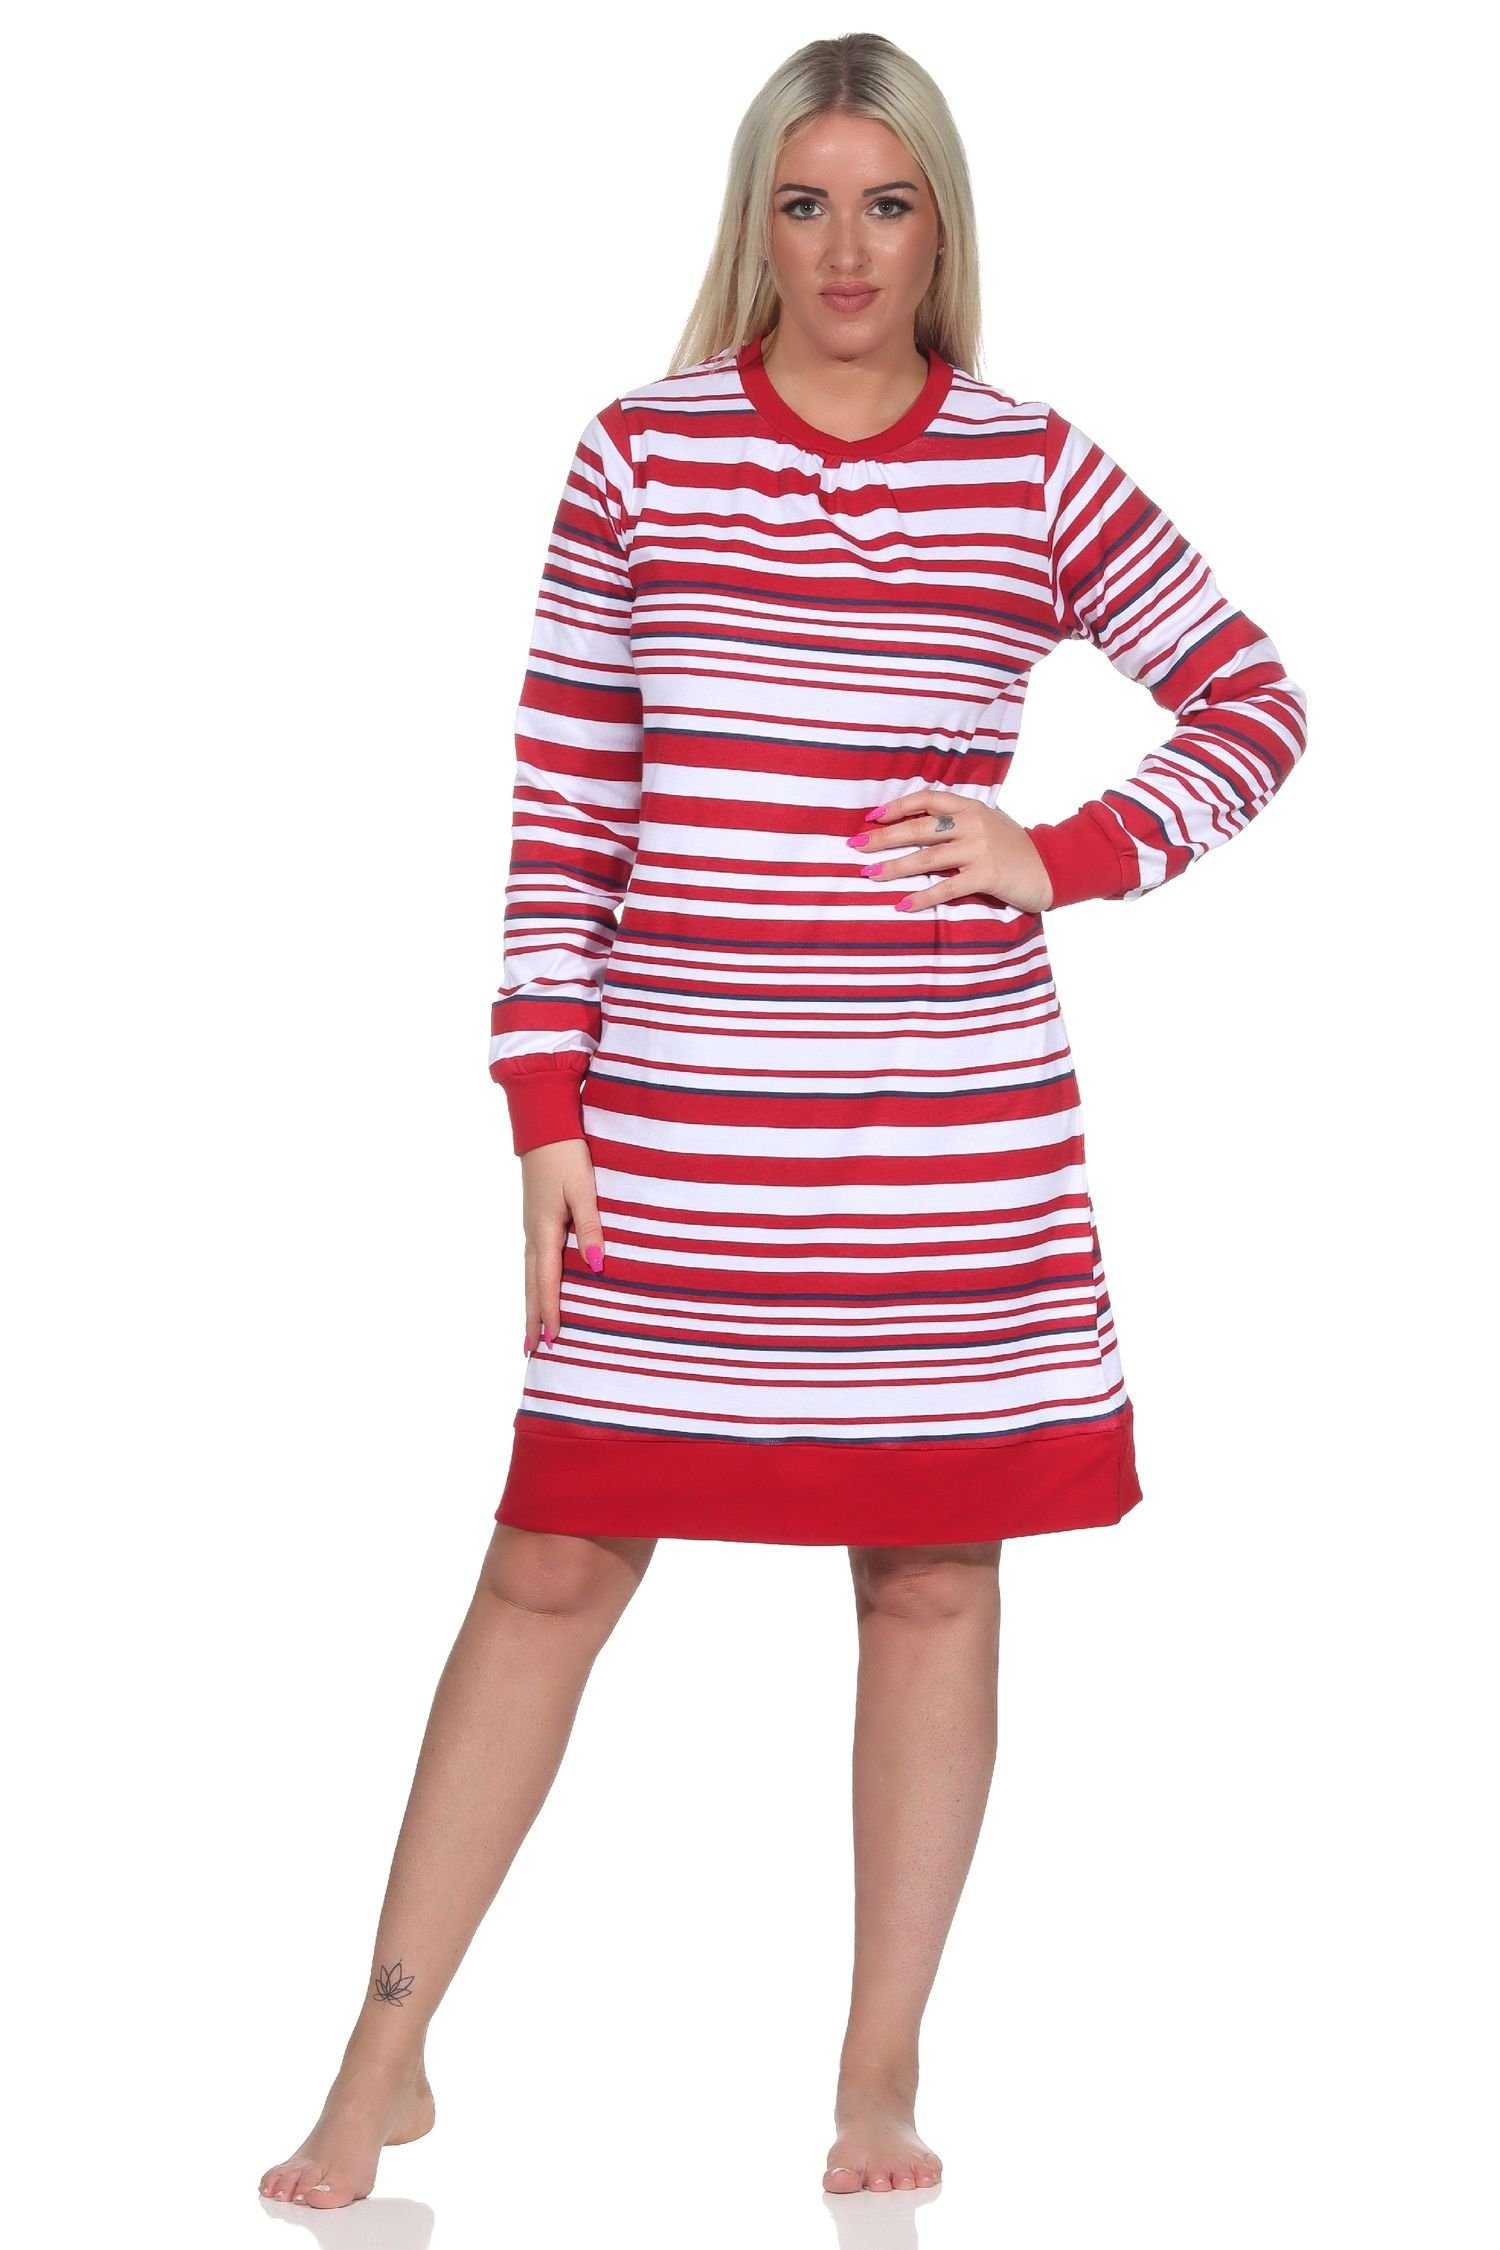 Normann Nachthemd Kuschel Interlock Damen Nachthemd mit Bündchen in maritimer Optik rot